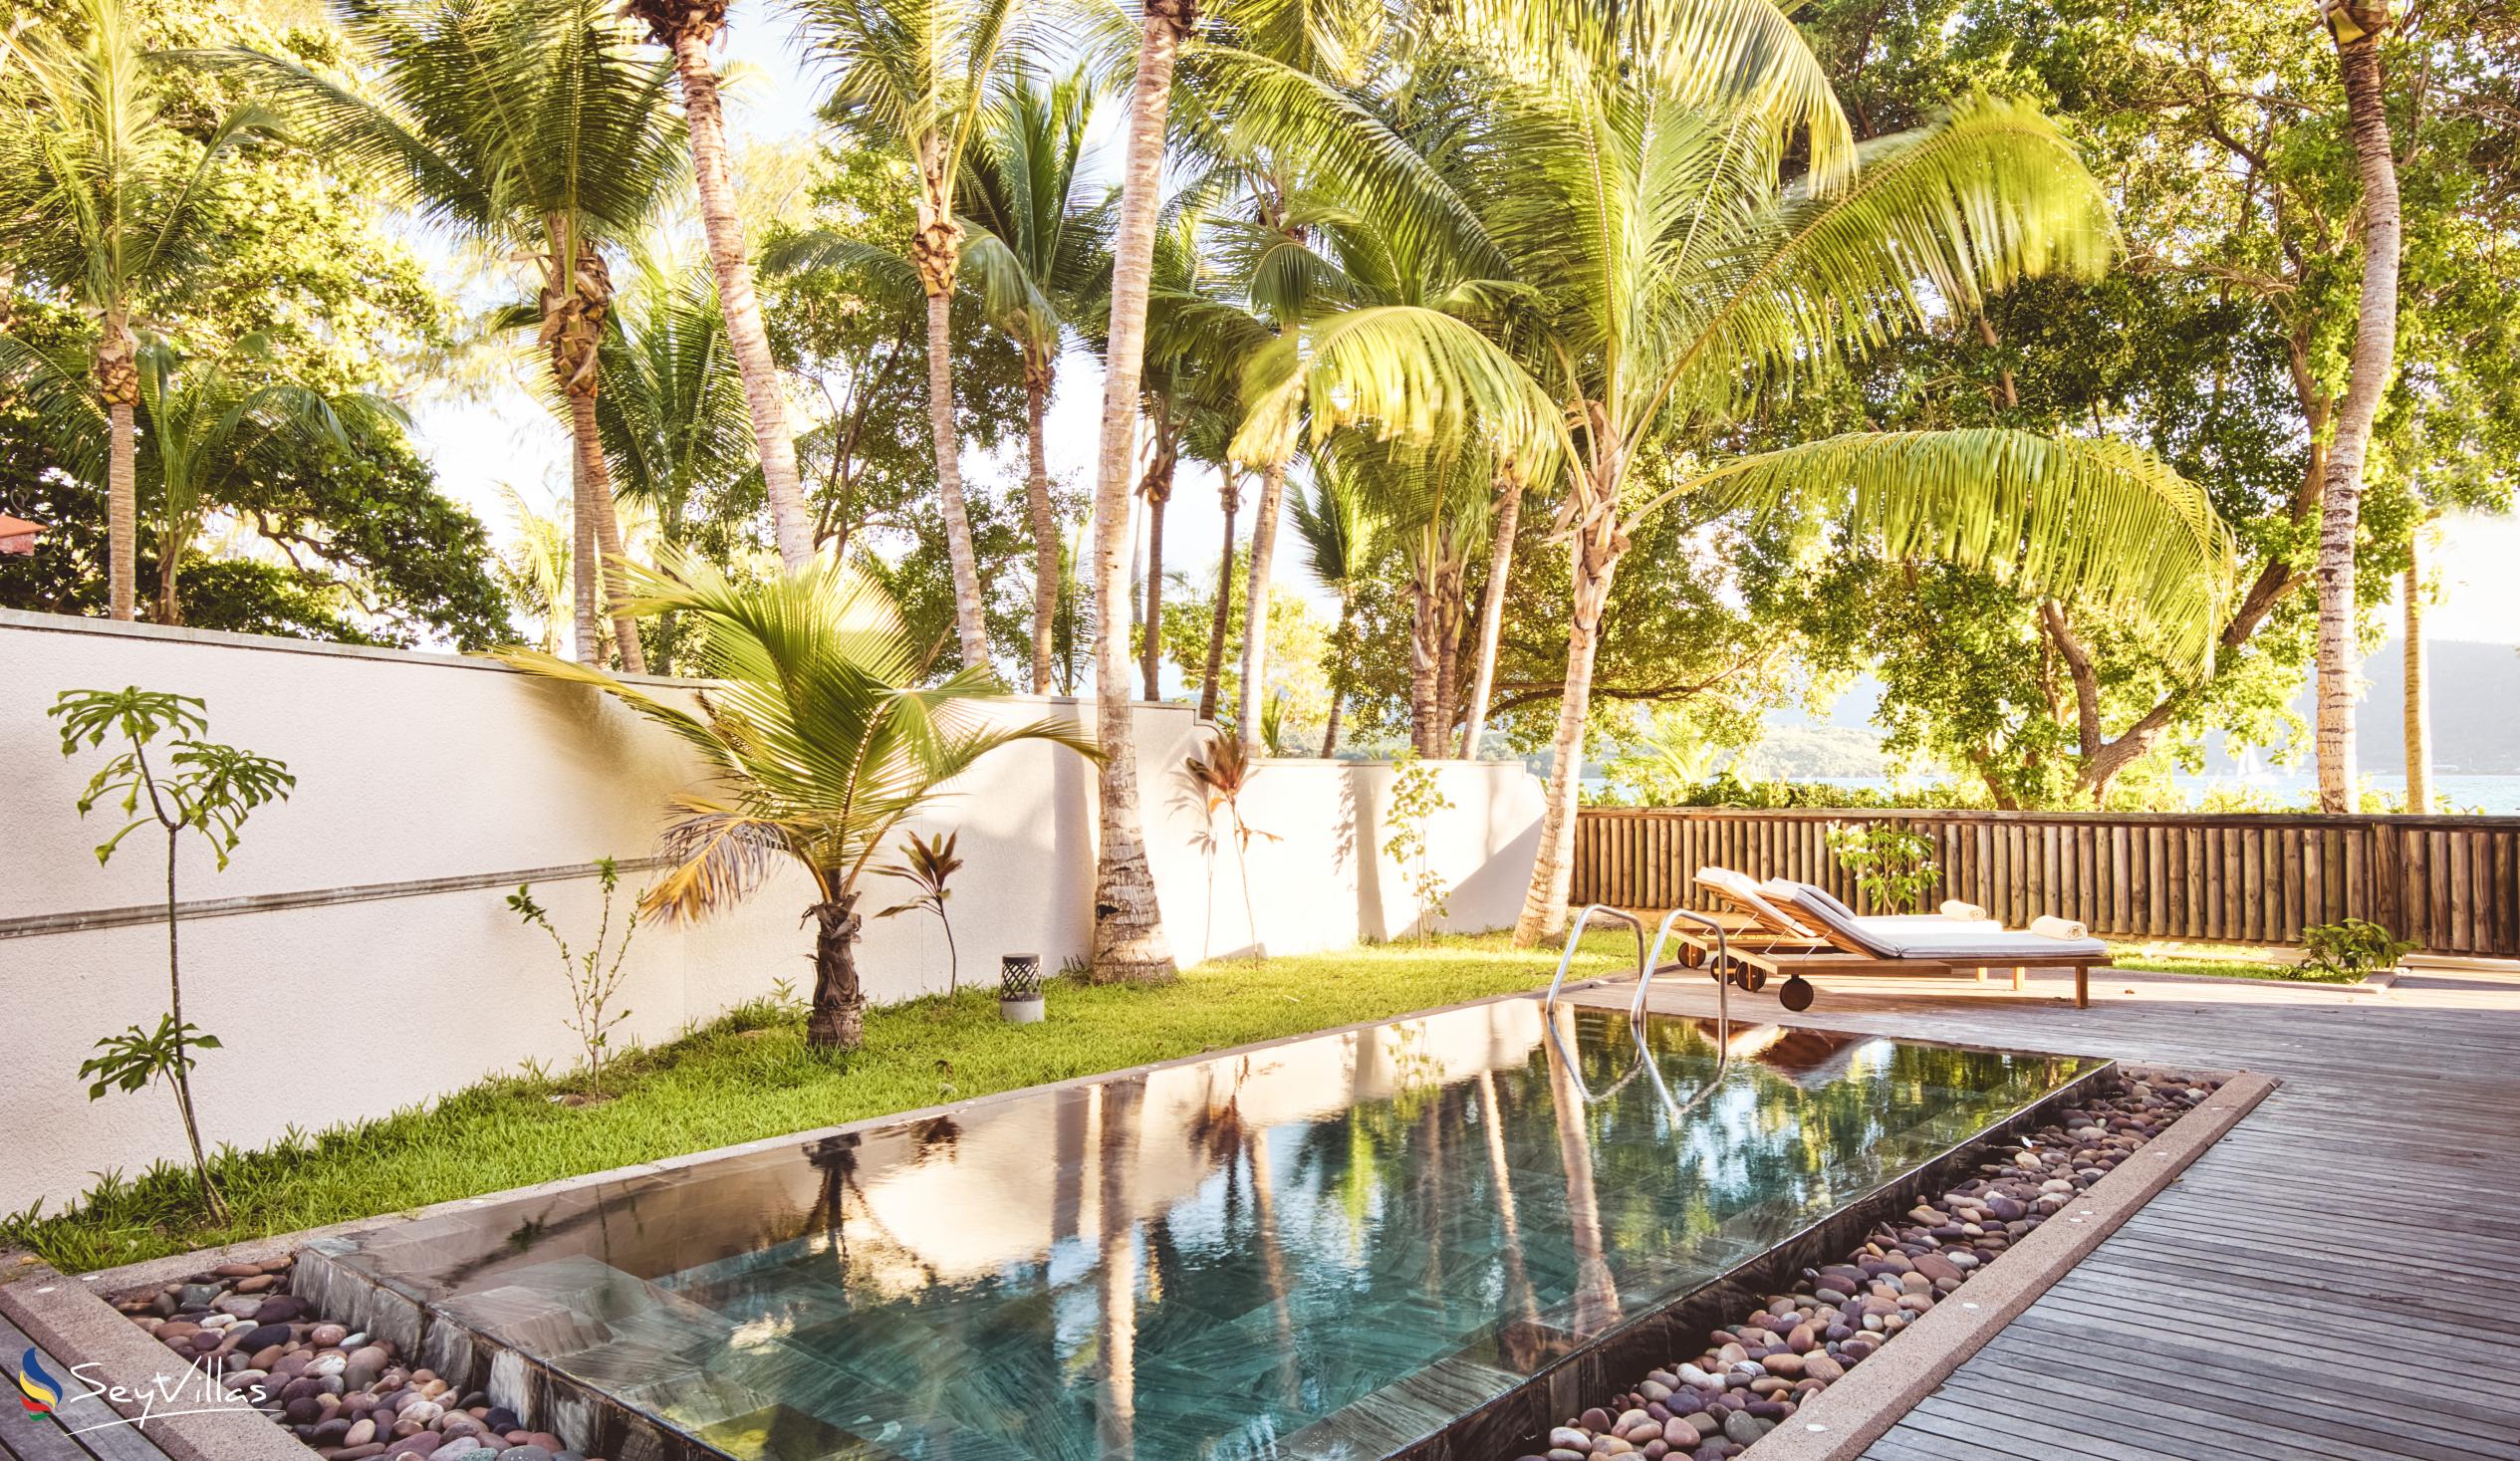 Foto 88: Club Med Seychelles - Familiensuite mit privatem Pool - Saint Anne (Seychellen)